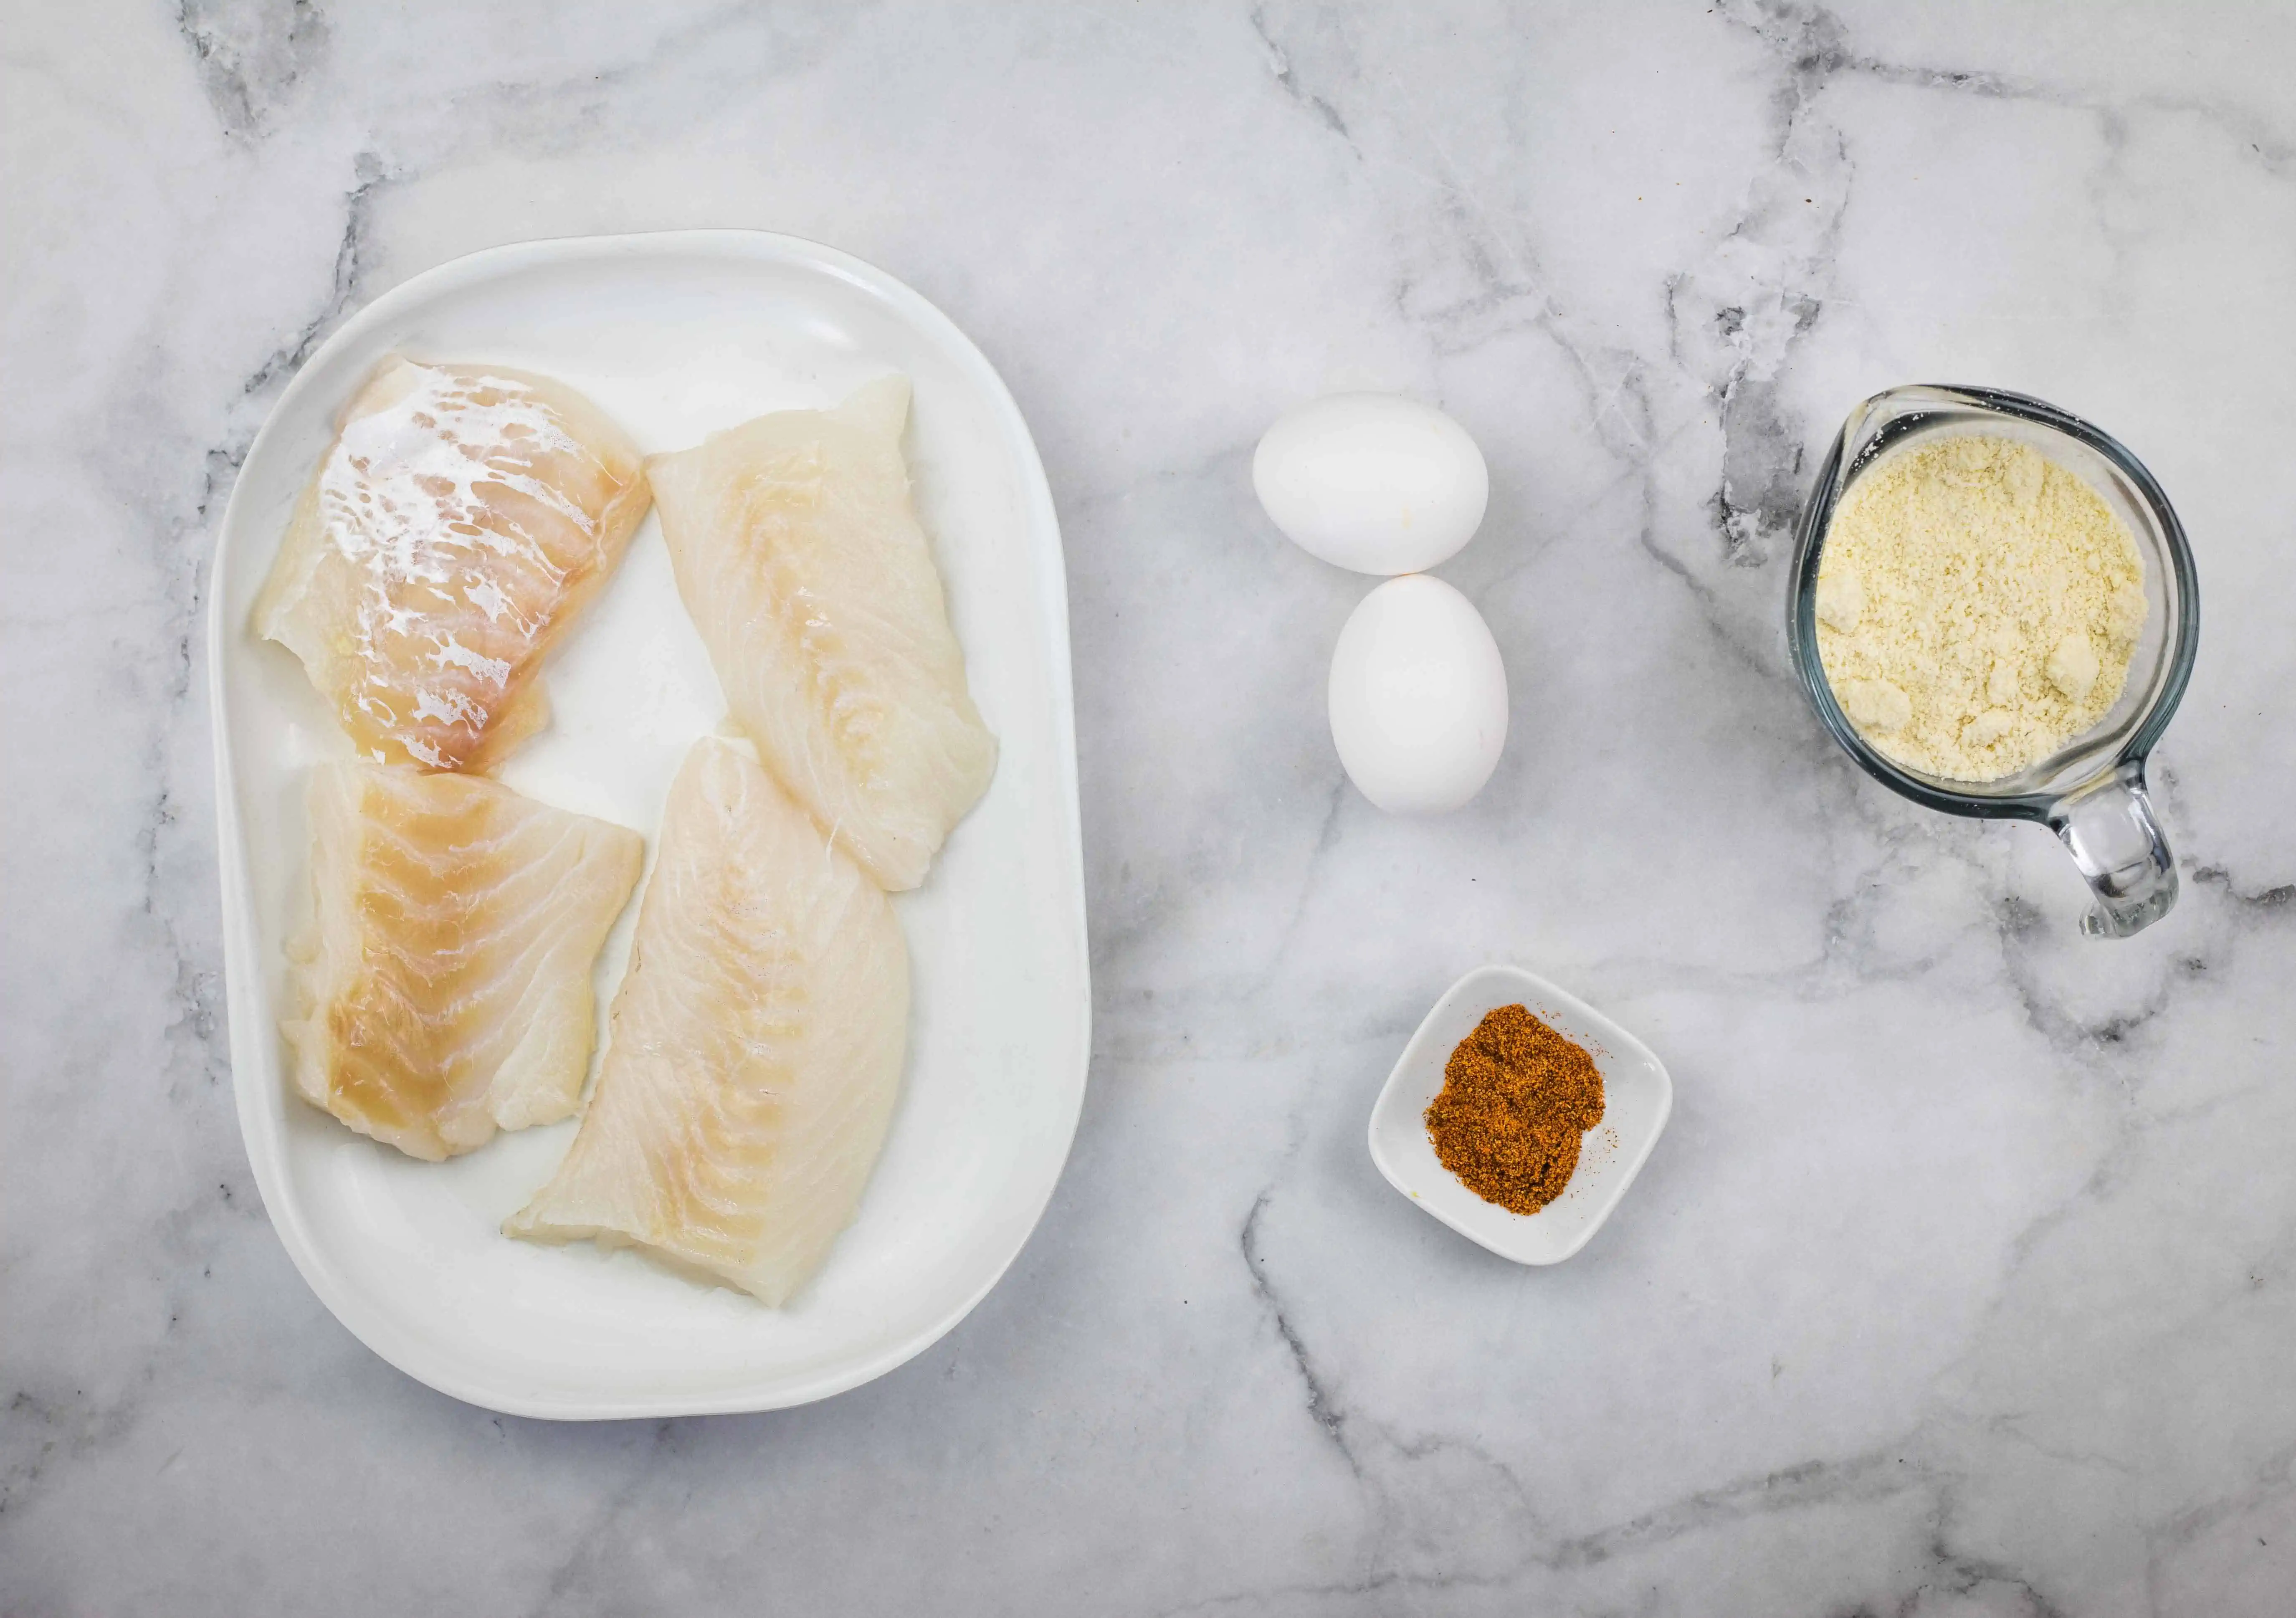 Ingredients to make keto fried cod.